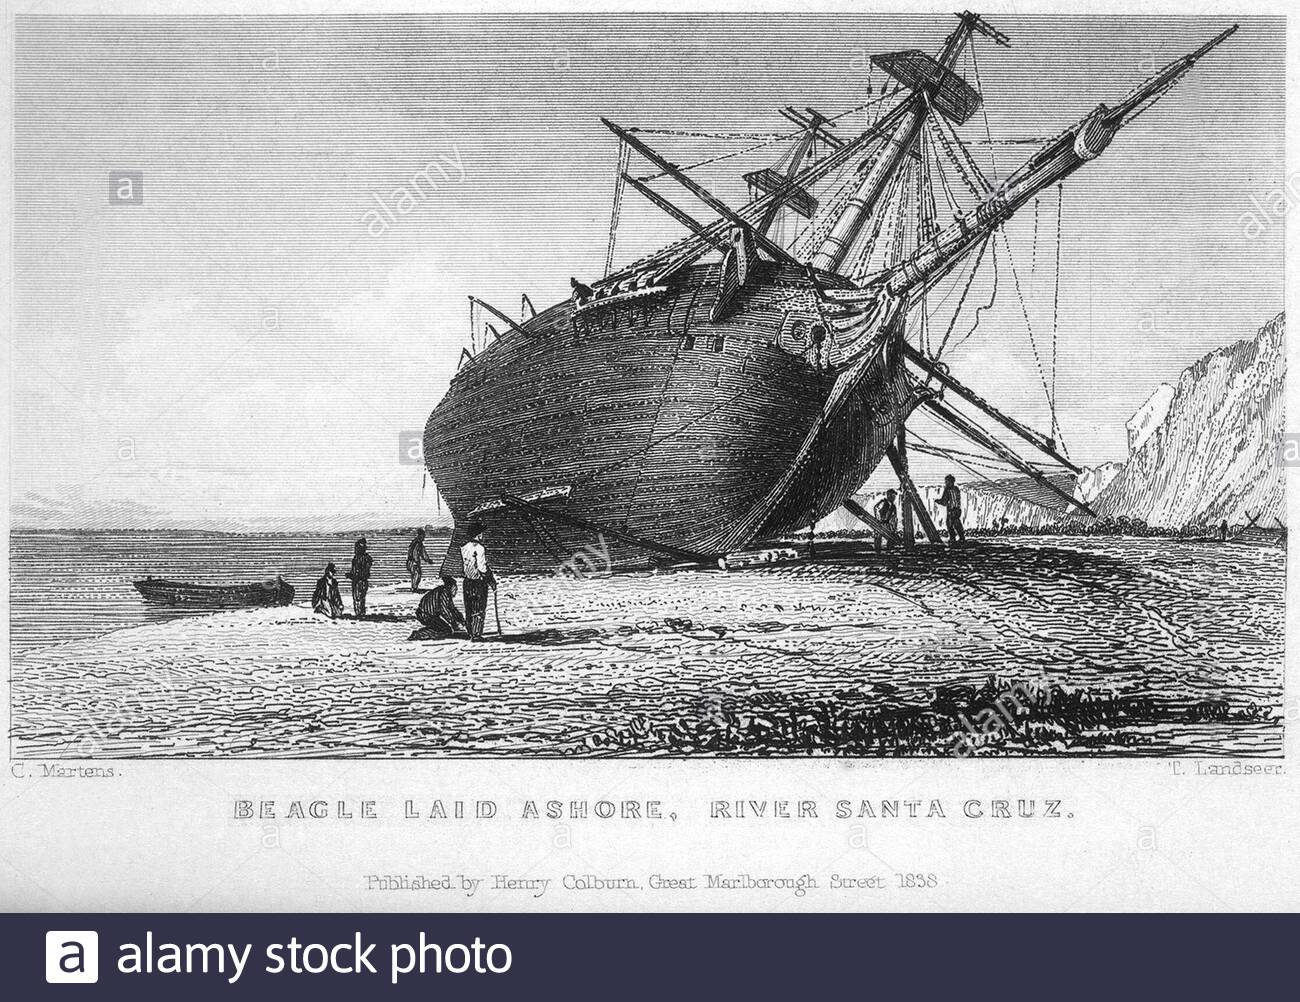 HMS Beagle laid ashore for repairs, River Santa Cruz, vintage illustration from 1838 Stock Photo